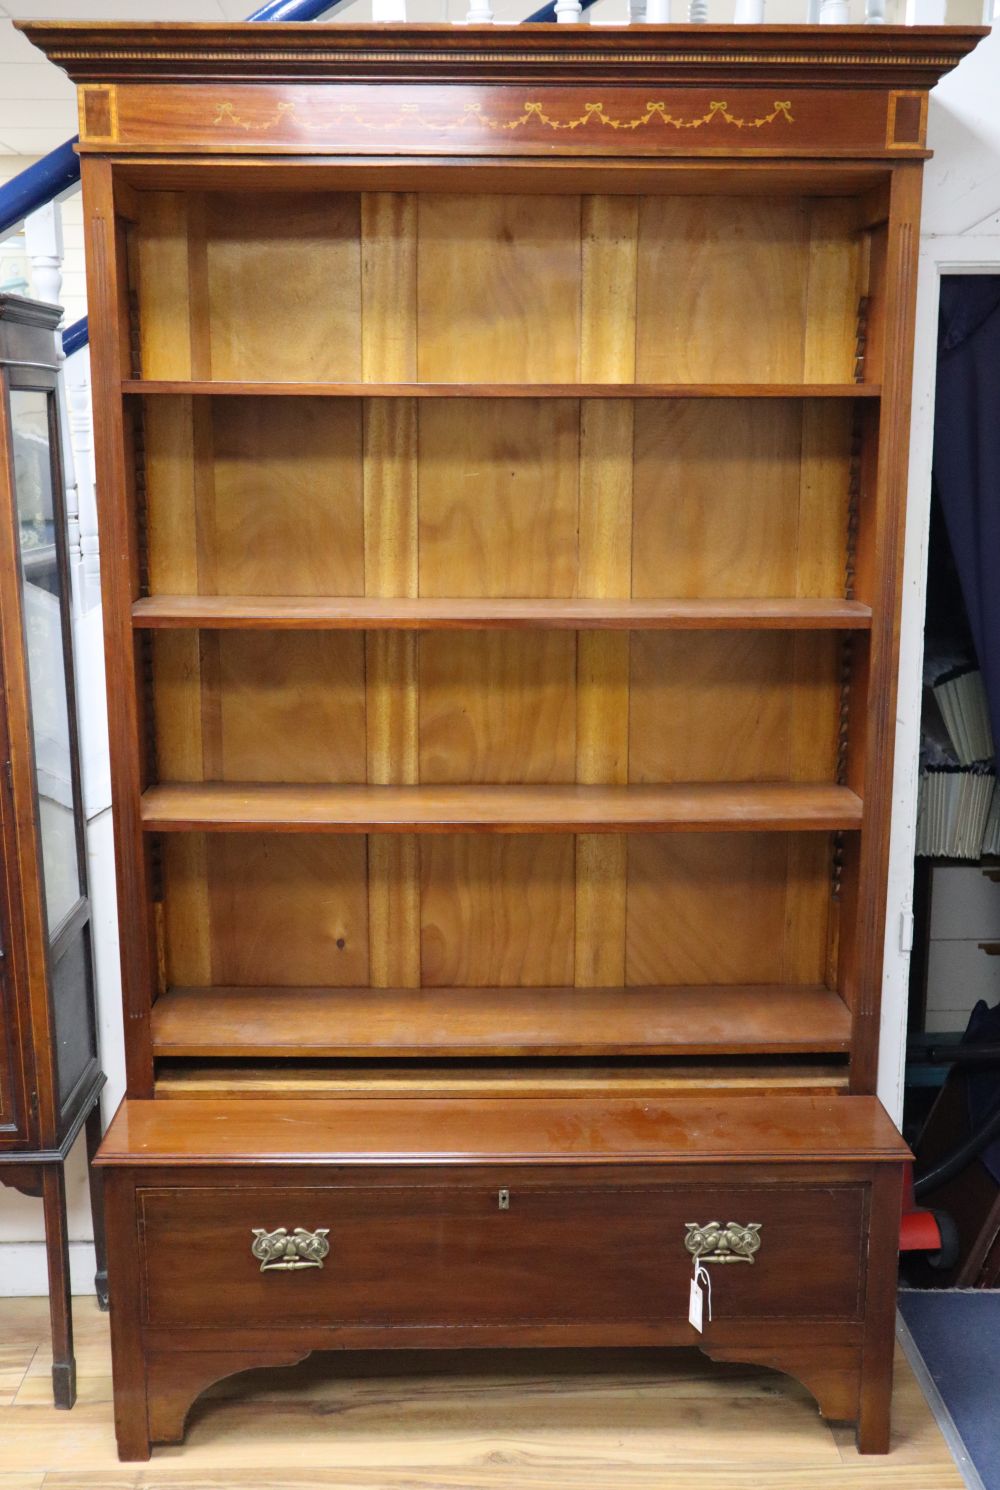 An Edwardian style inlaid mahogany open bookcase, W.130cm, D.48cm, H.206cm